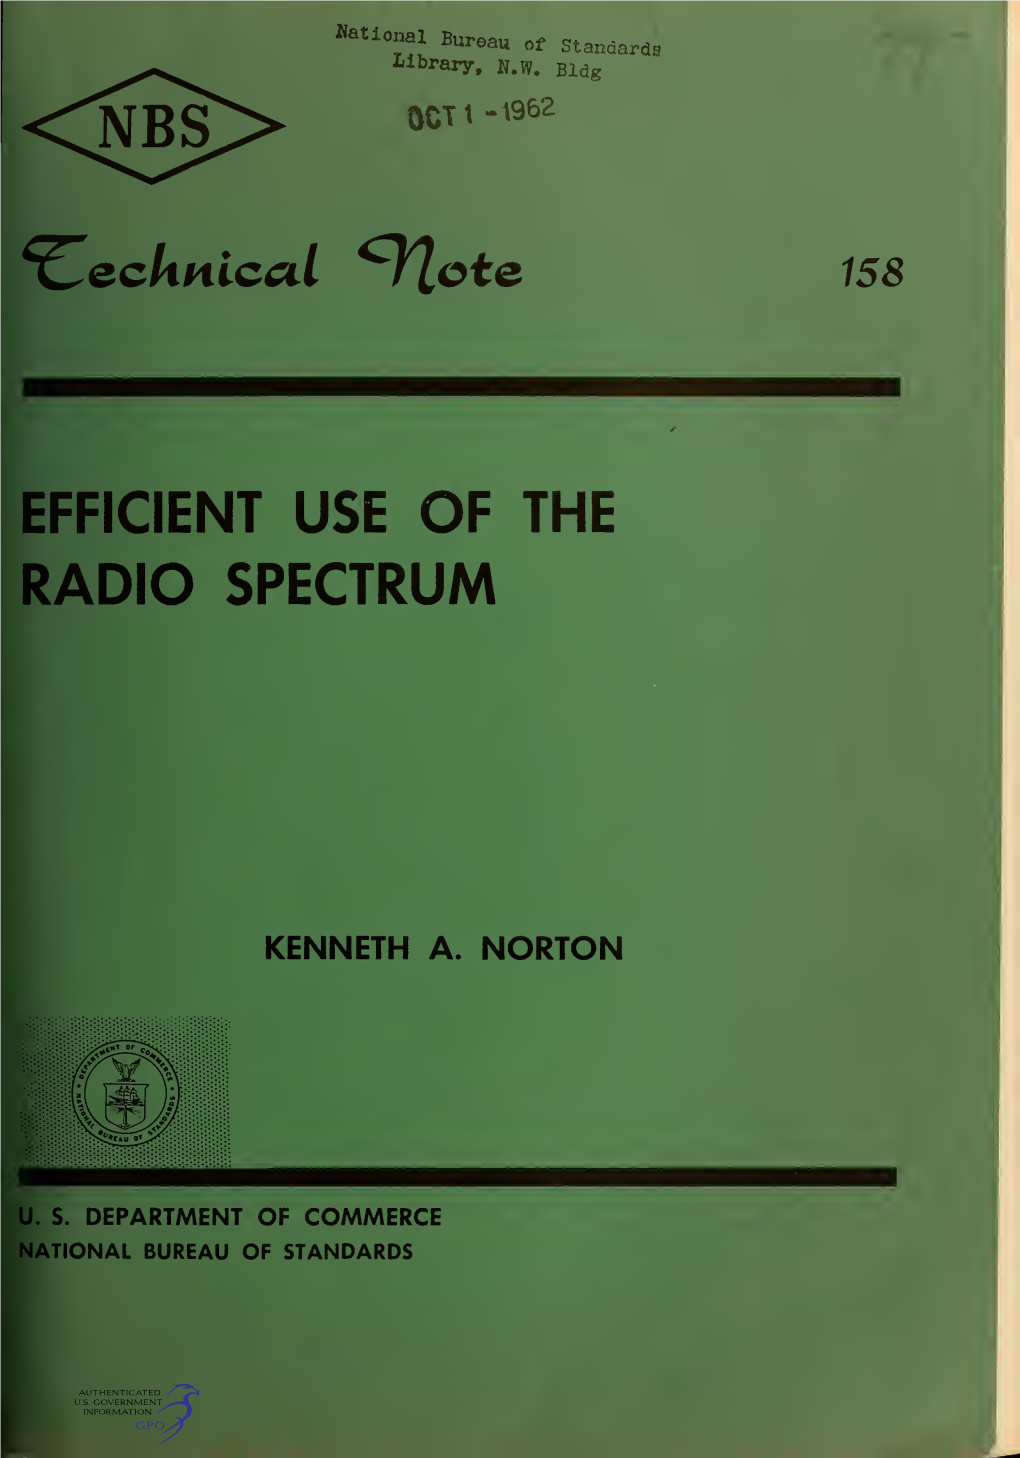 Efficient Use of the Radio Spectrum